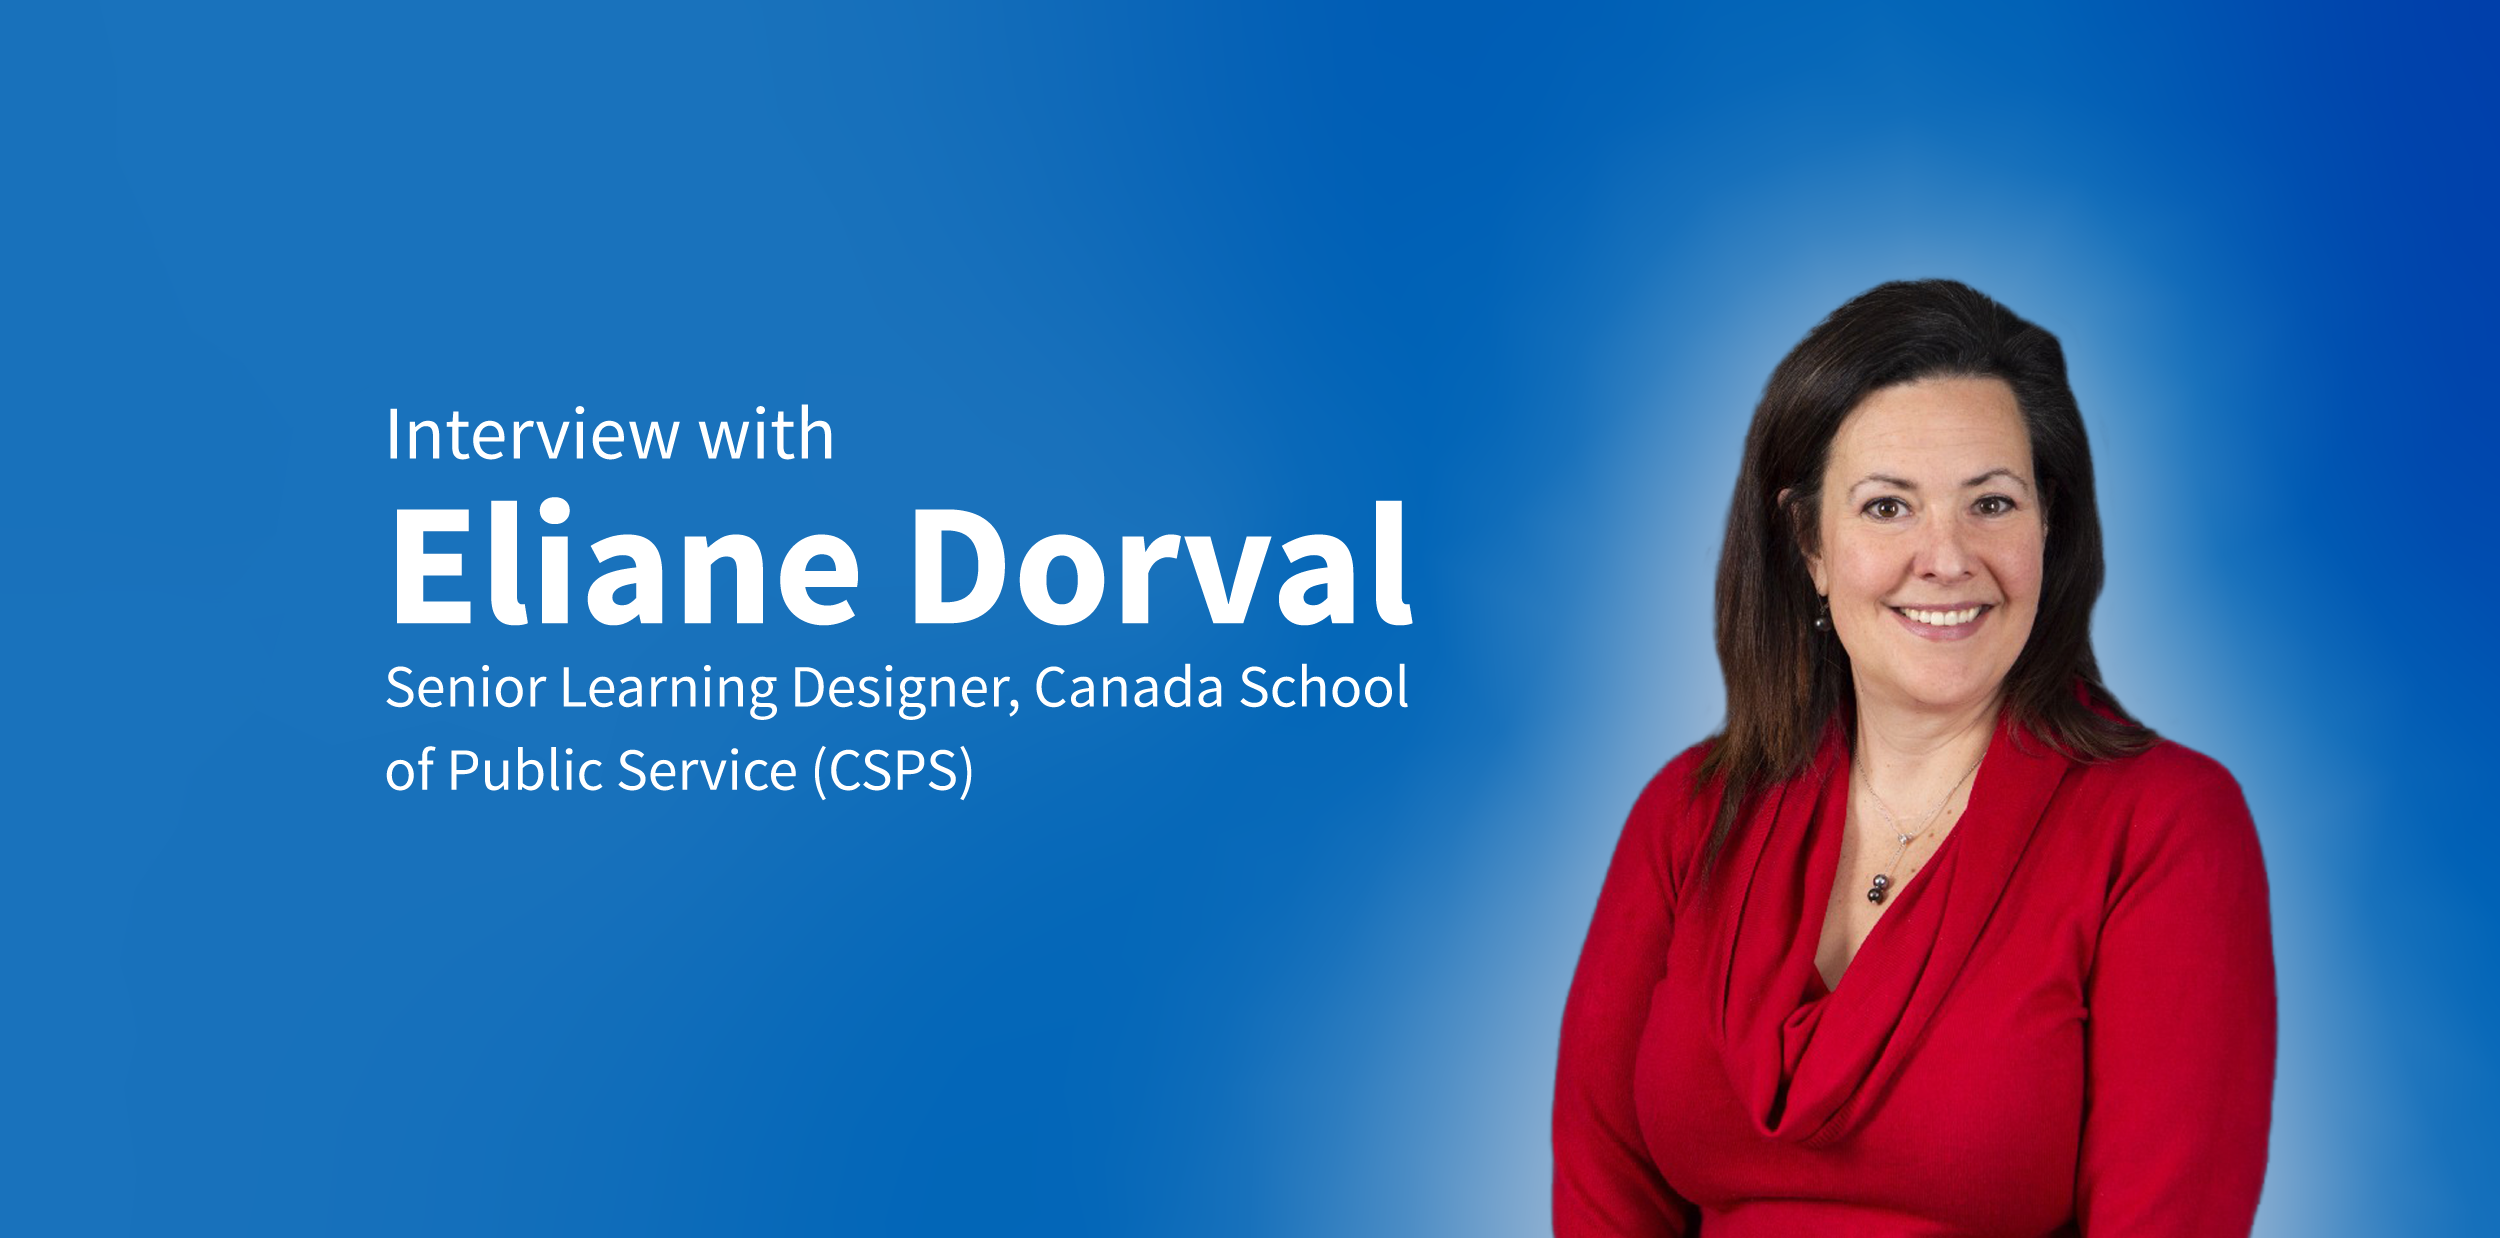 Eliane Dorval, Senior Learning Designer, Canada School of Public Service (CSPS)